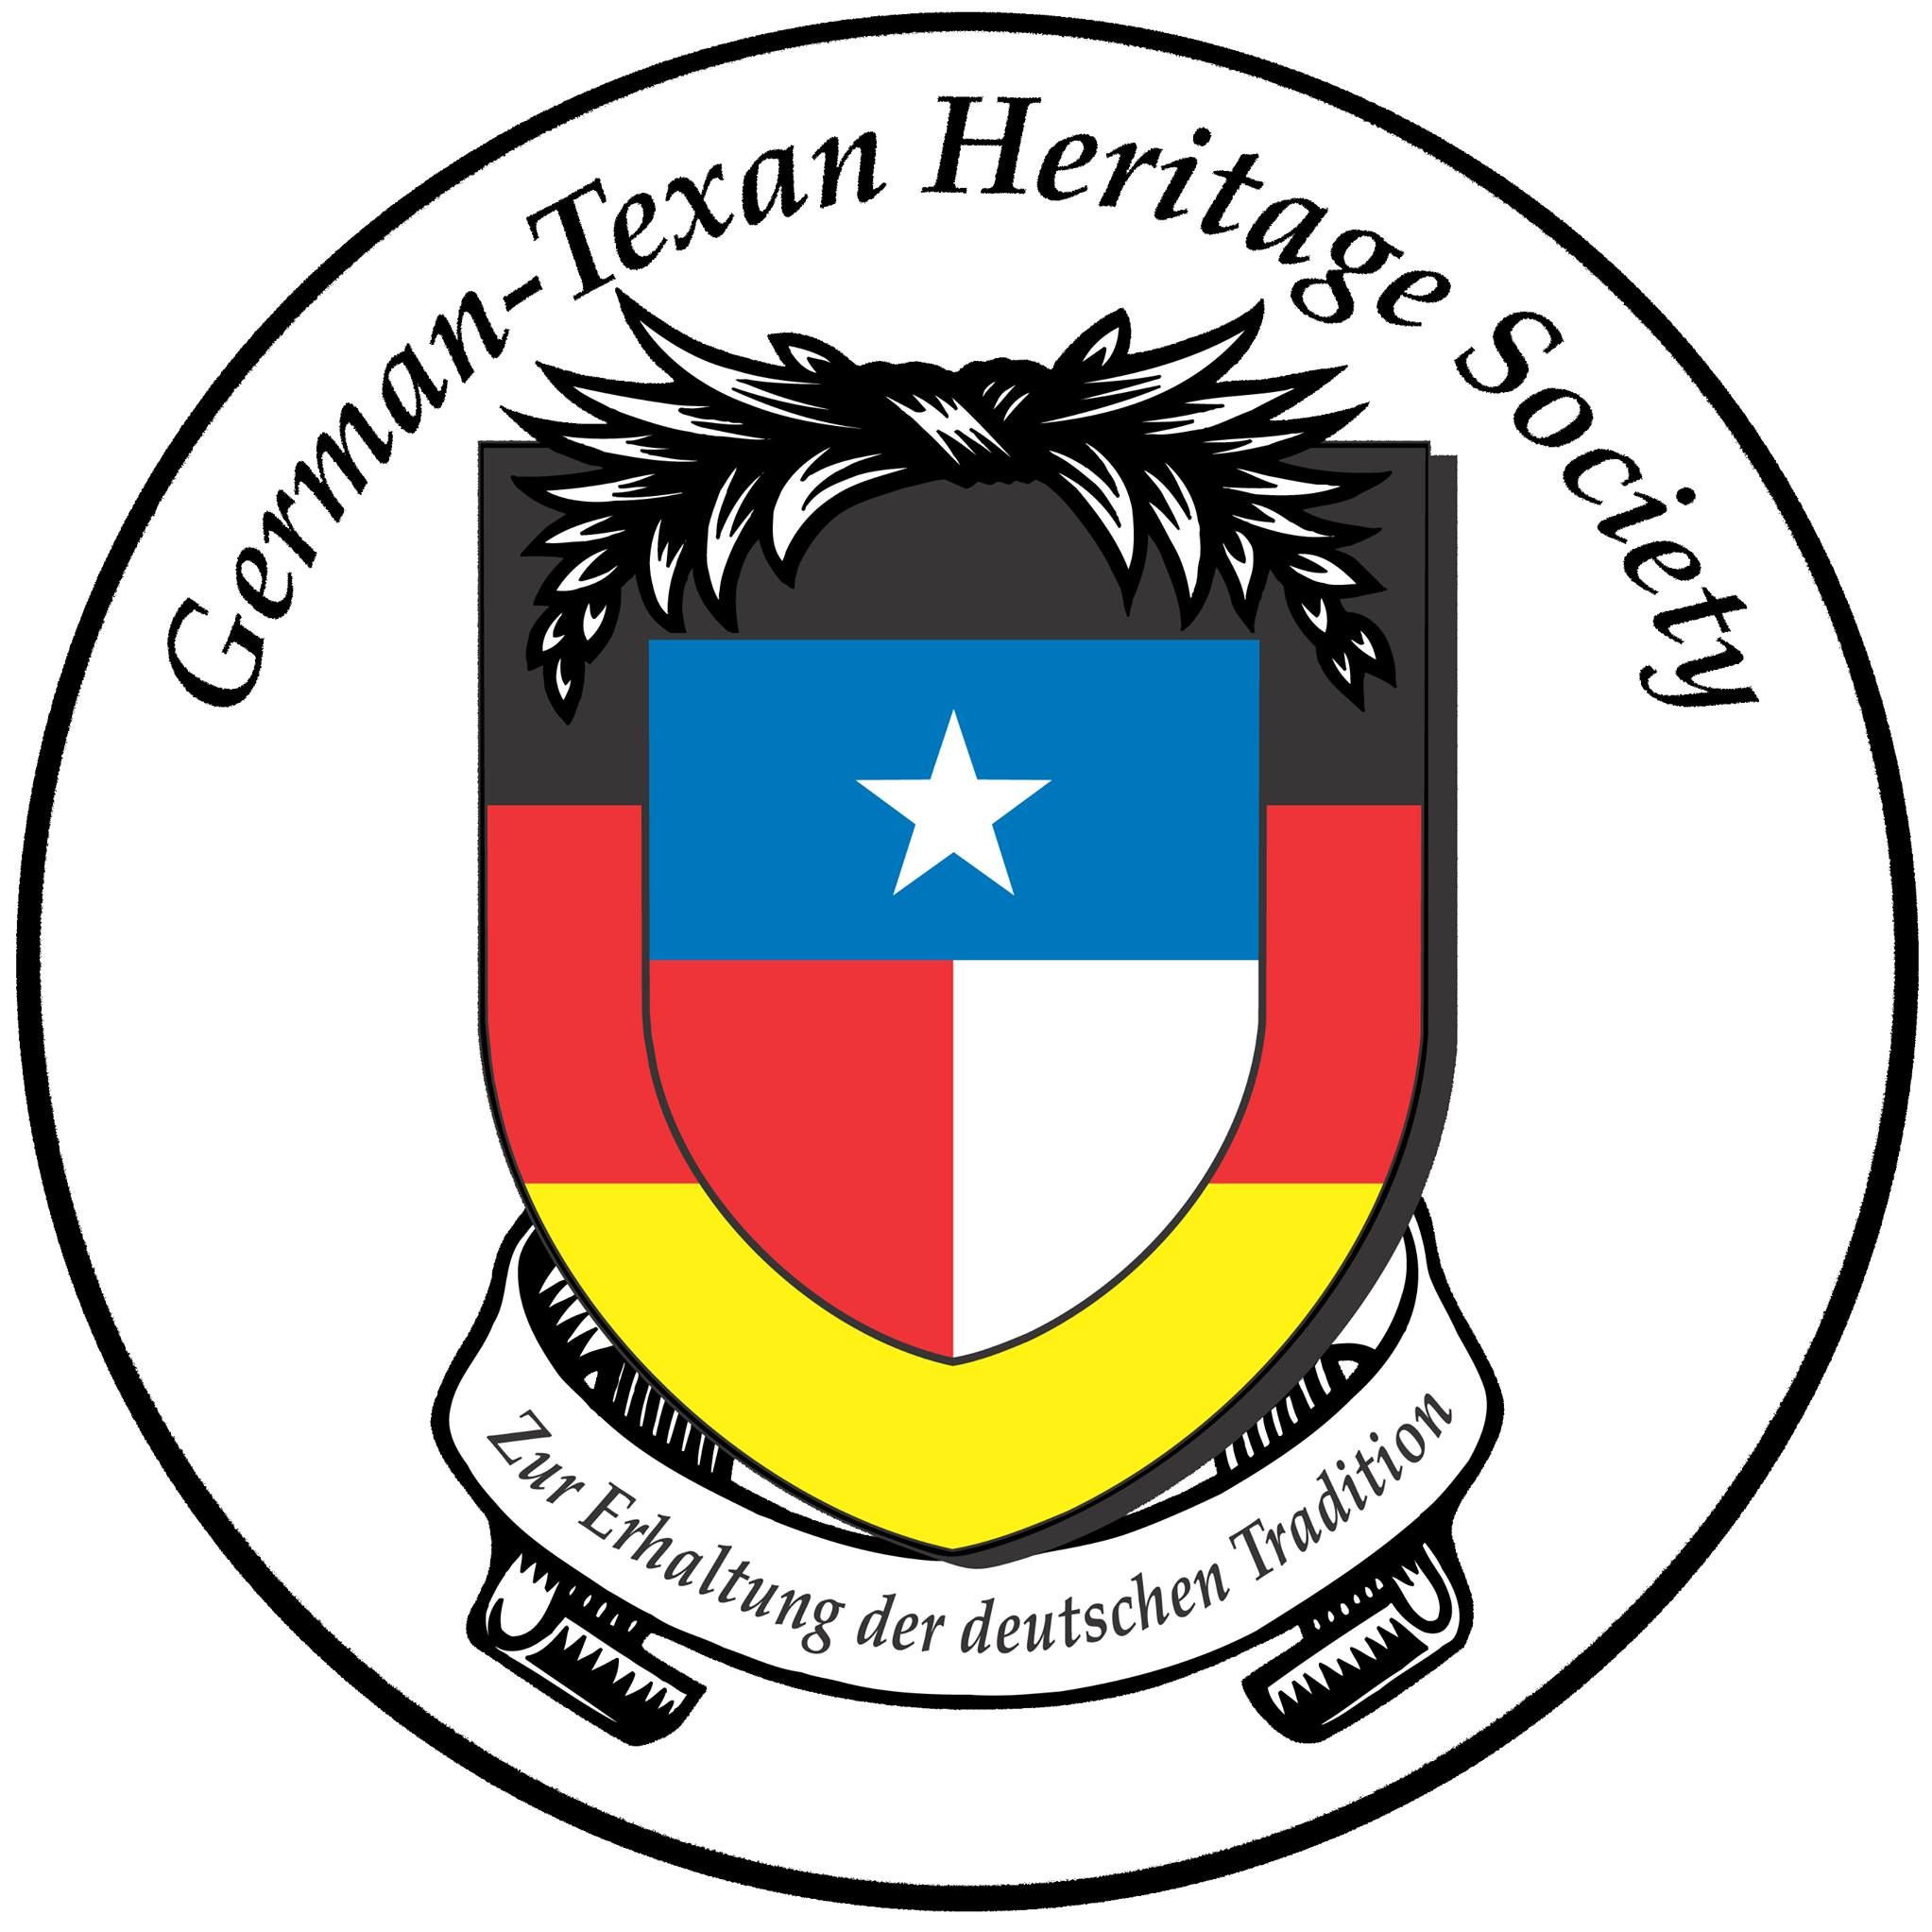 German Organization in San Antonio Texas - German Texan Heritage Society